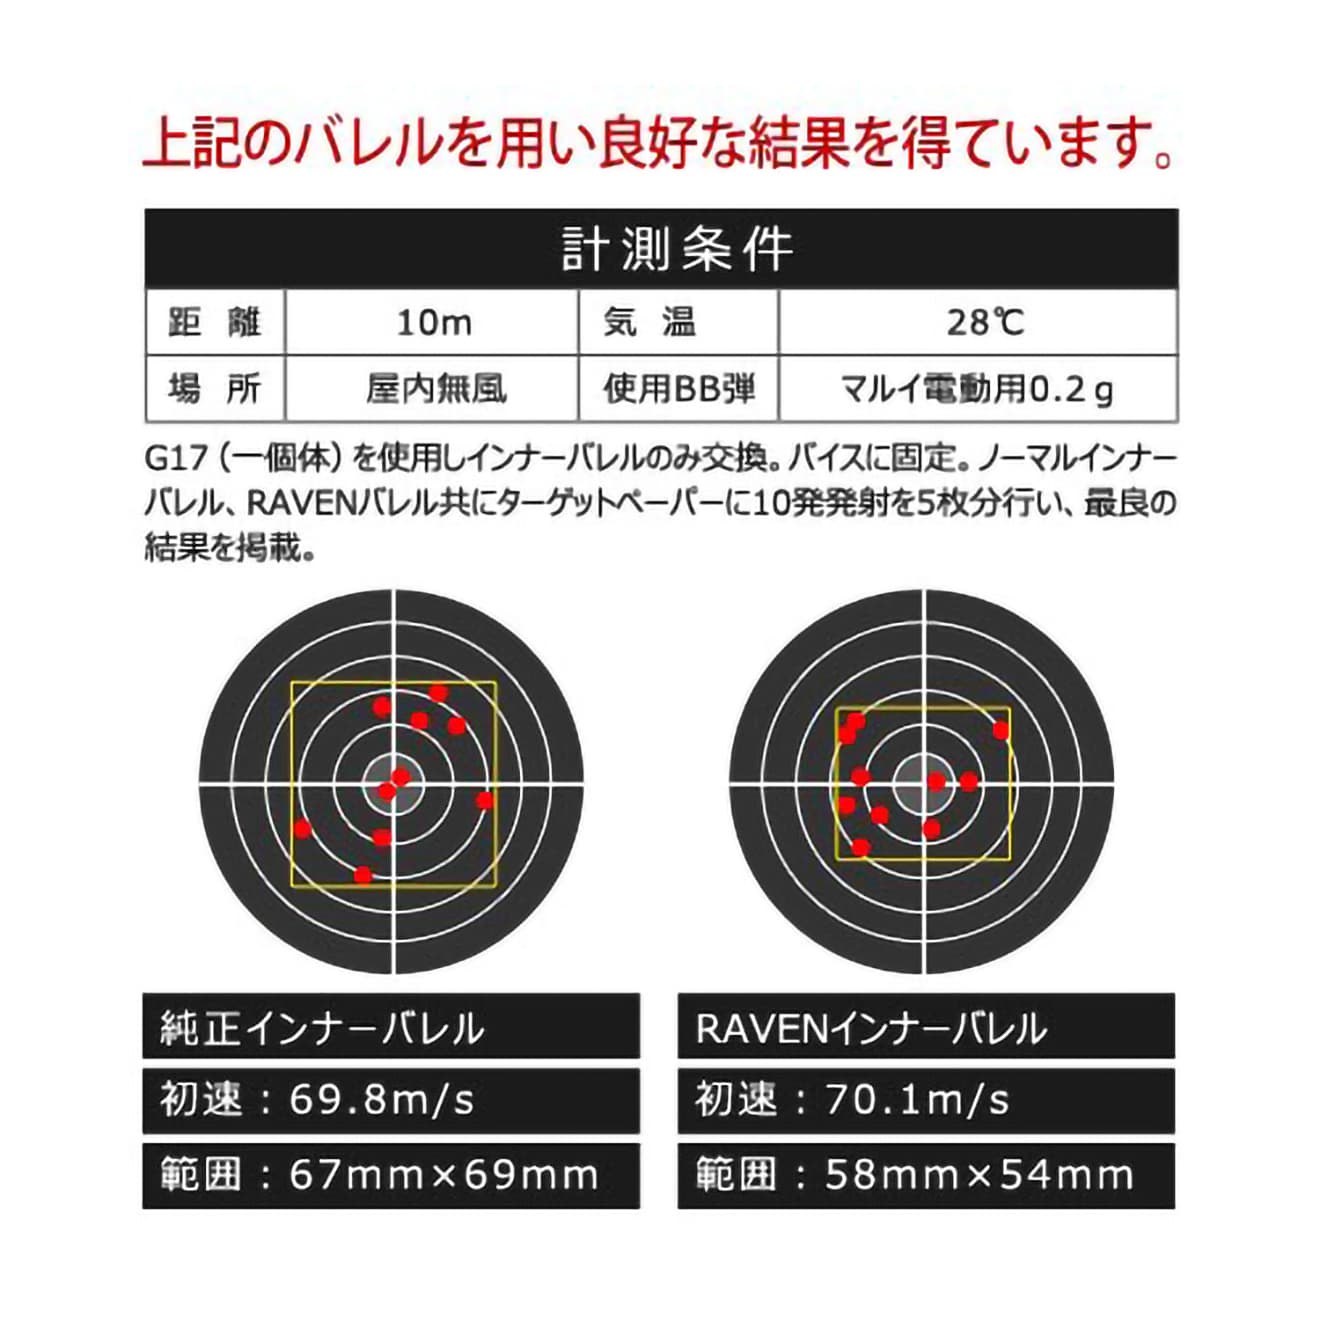 PDI RAVENシリーズ 01+ KSG専用 精密インナーバレル(6.01±0.007) 260mm